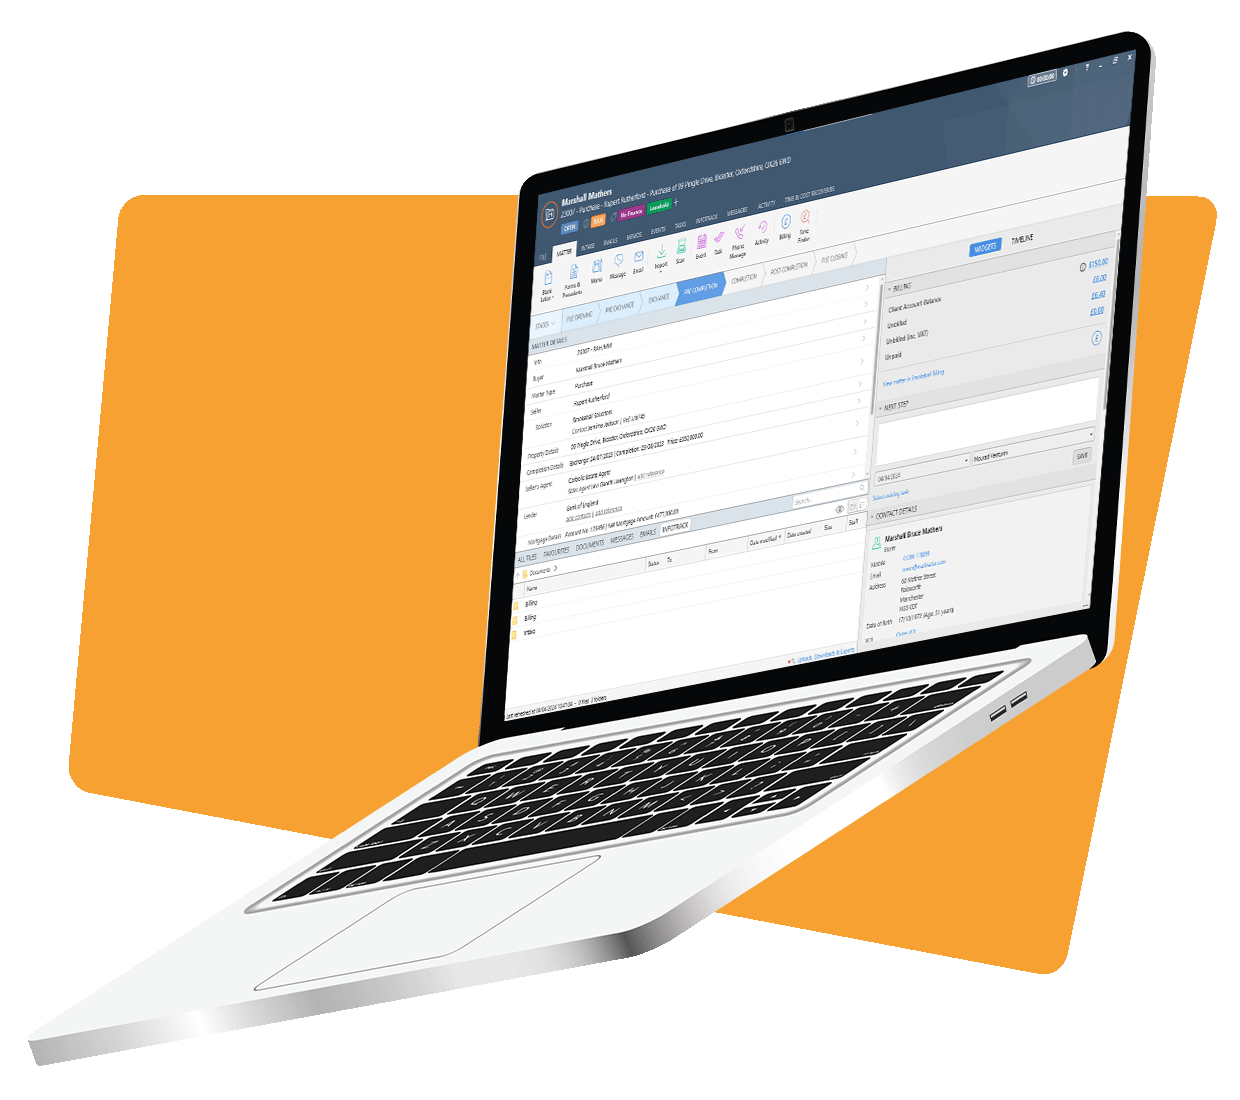 smokeball cms integration screen mocked up in a laptop set on an orange angular shape